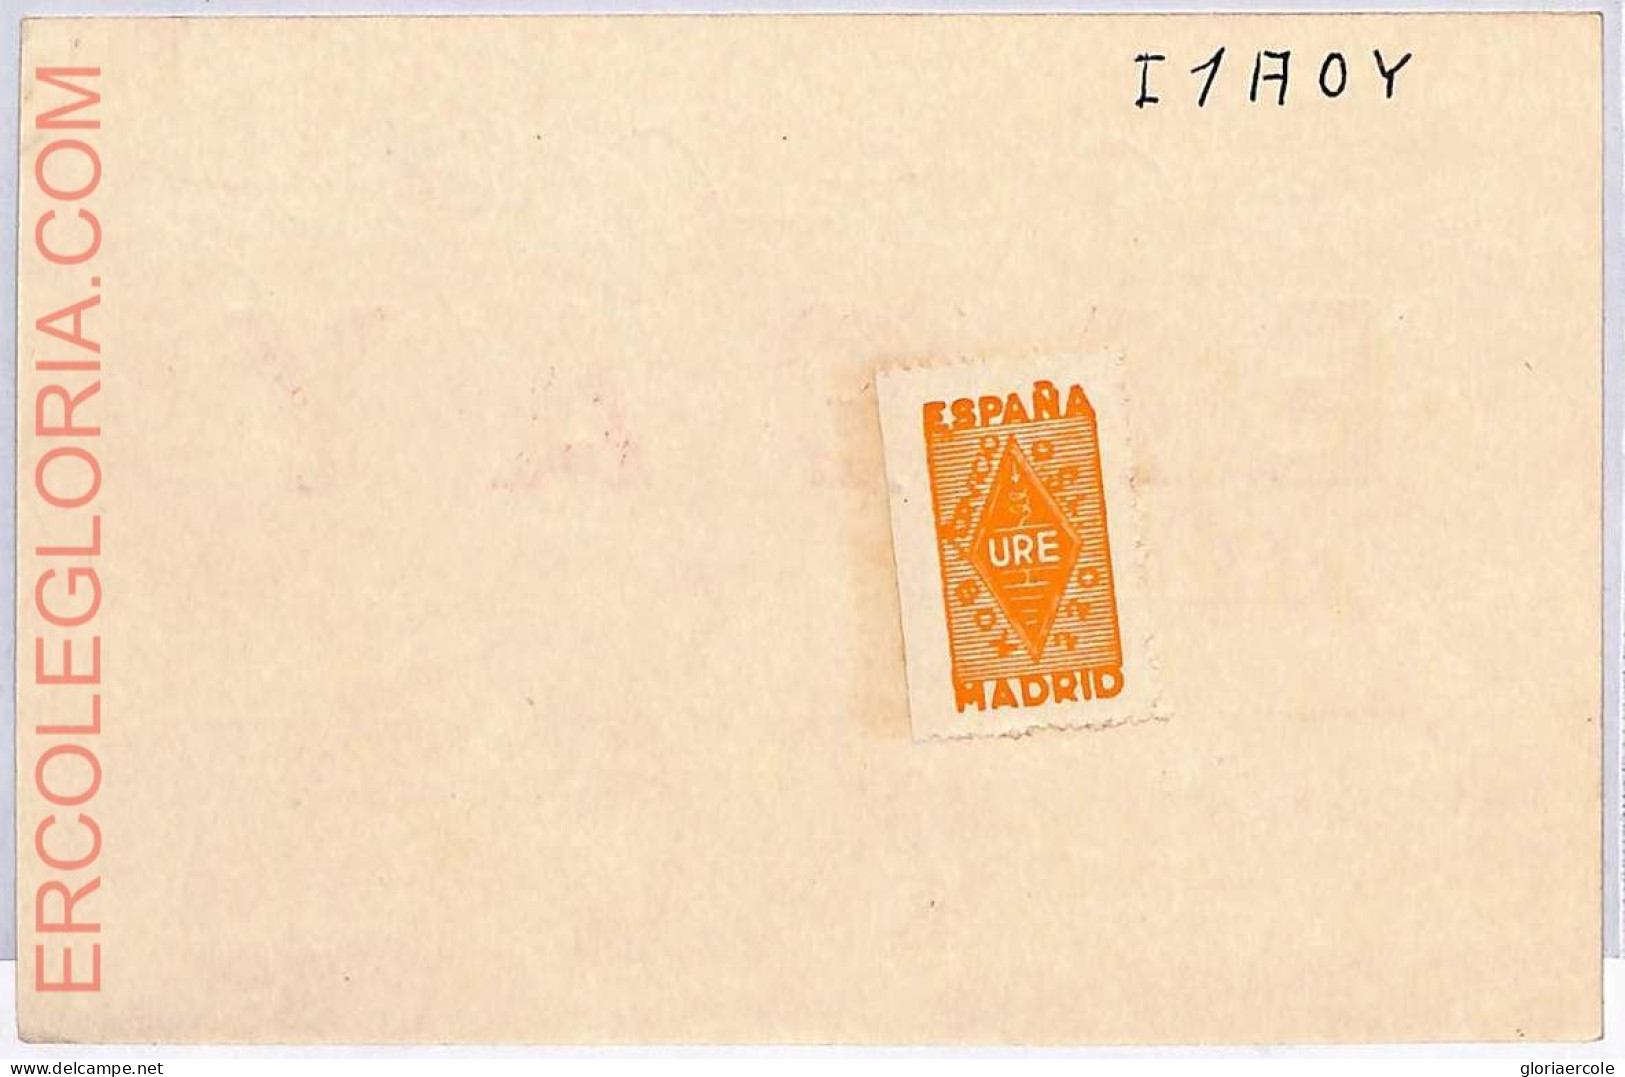 Ad9223 - SPAIN - RADIO FREQUENCY CARD  - 1955 - Radio